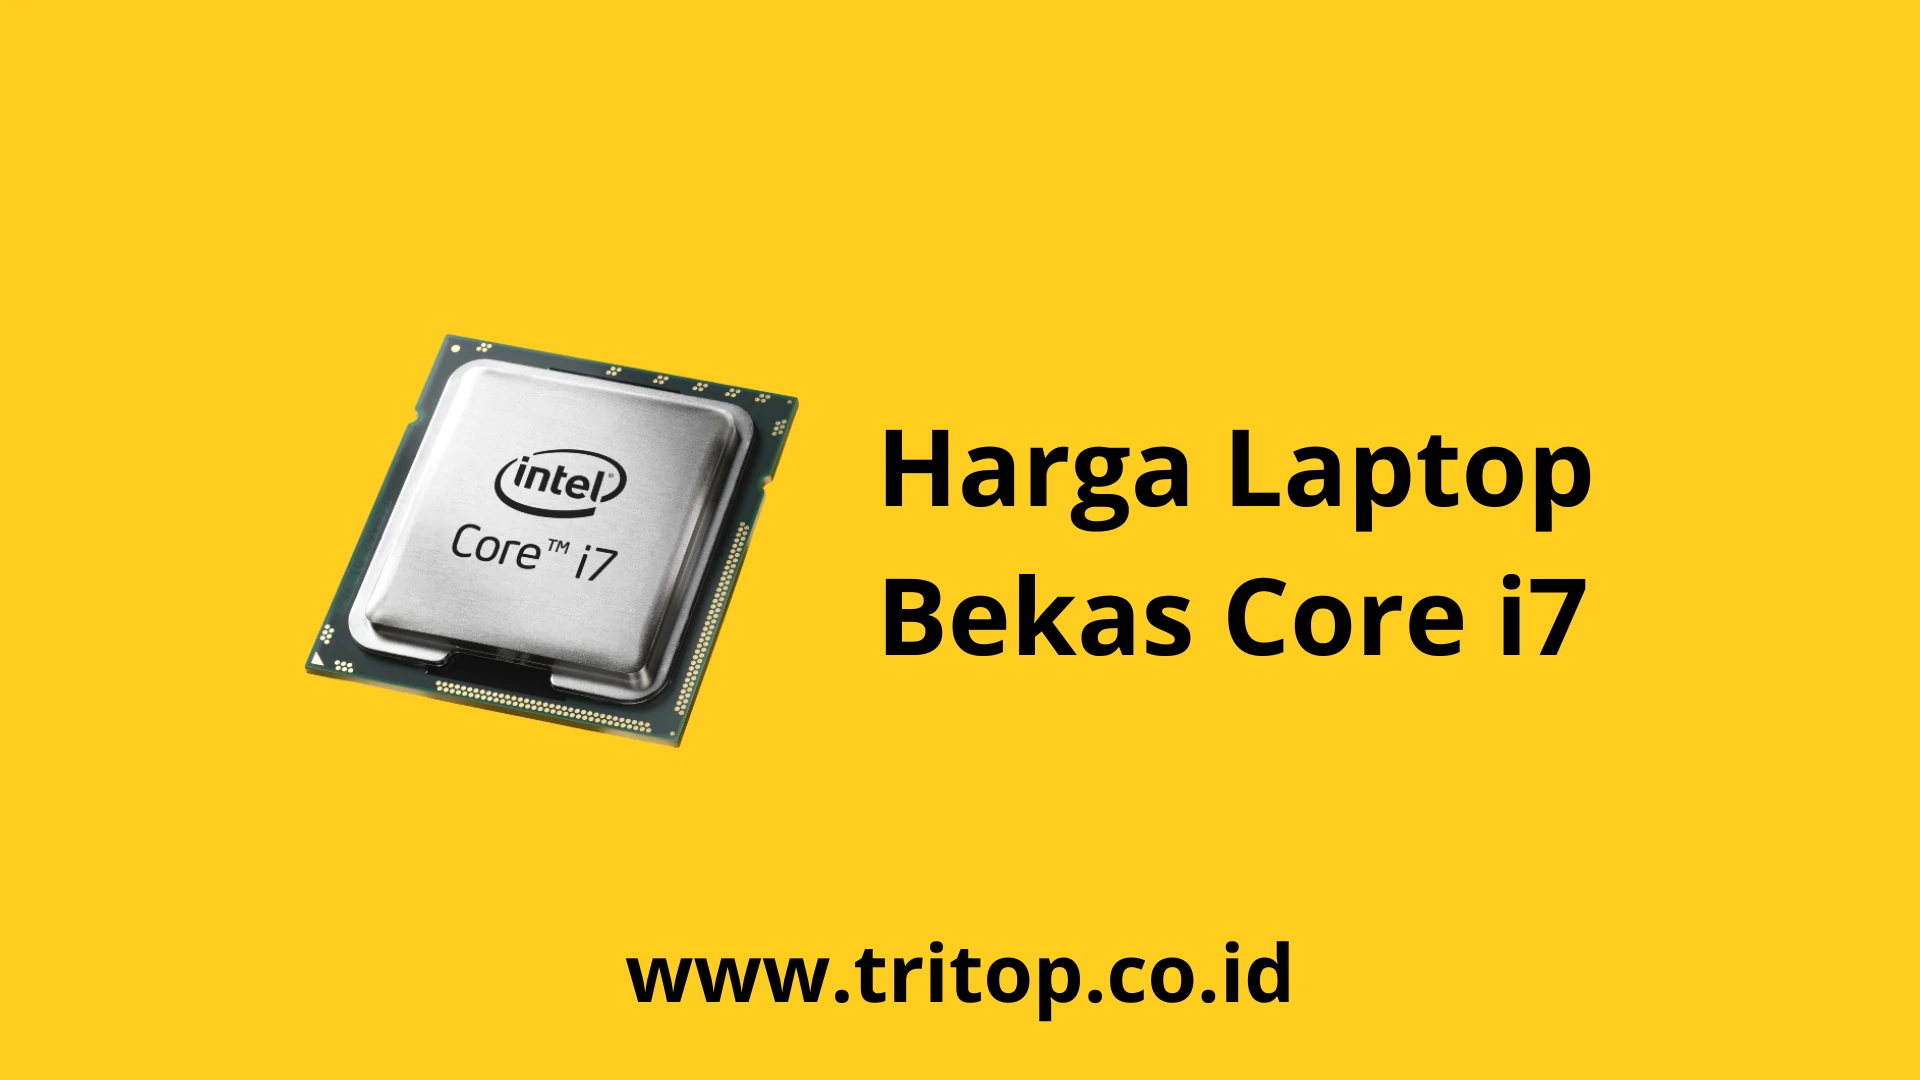 Harga Laptop Bekas Core i7 Tritop.co.id